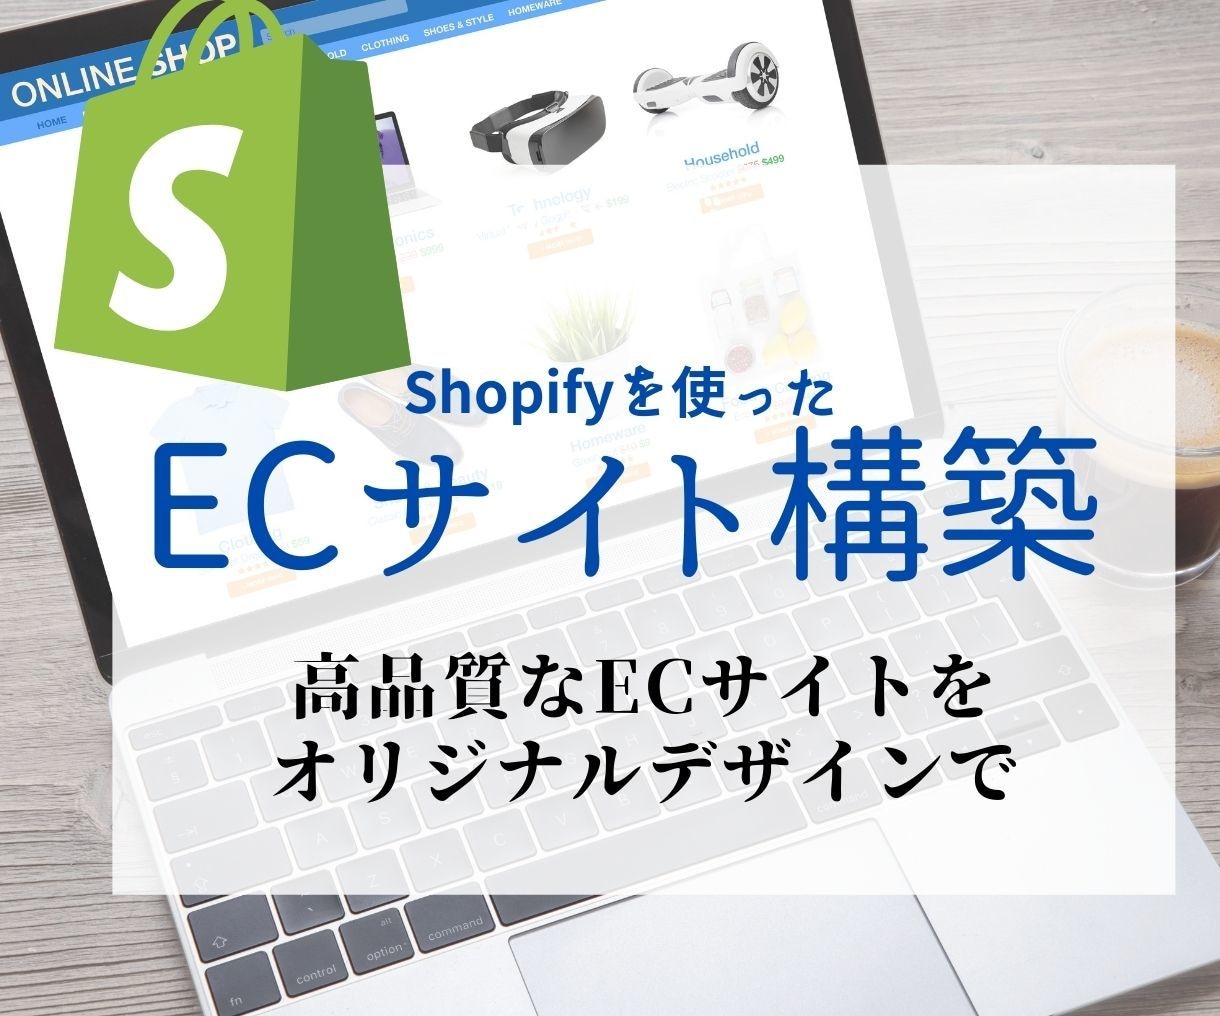 ShopifyでECサイトの構築します 高品質なネットショップをご提供します イメージ1